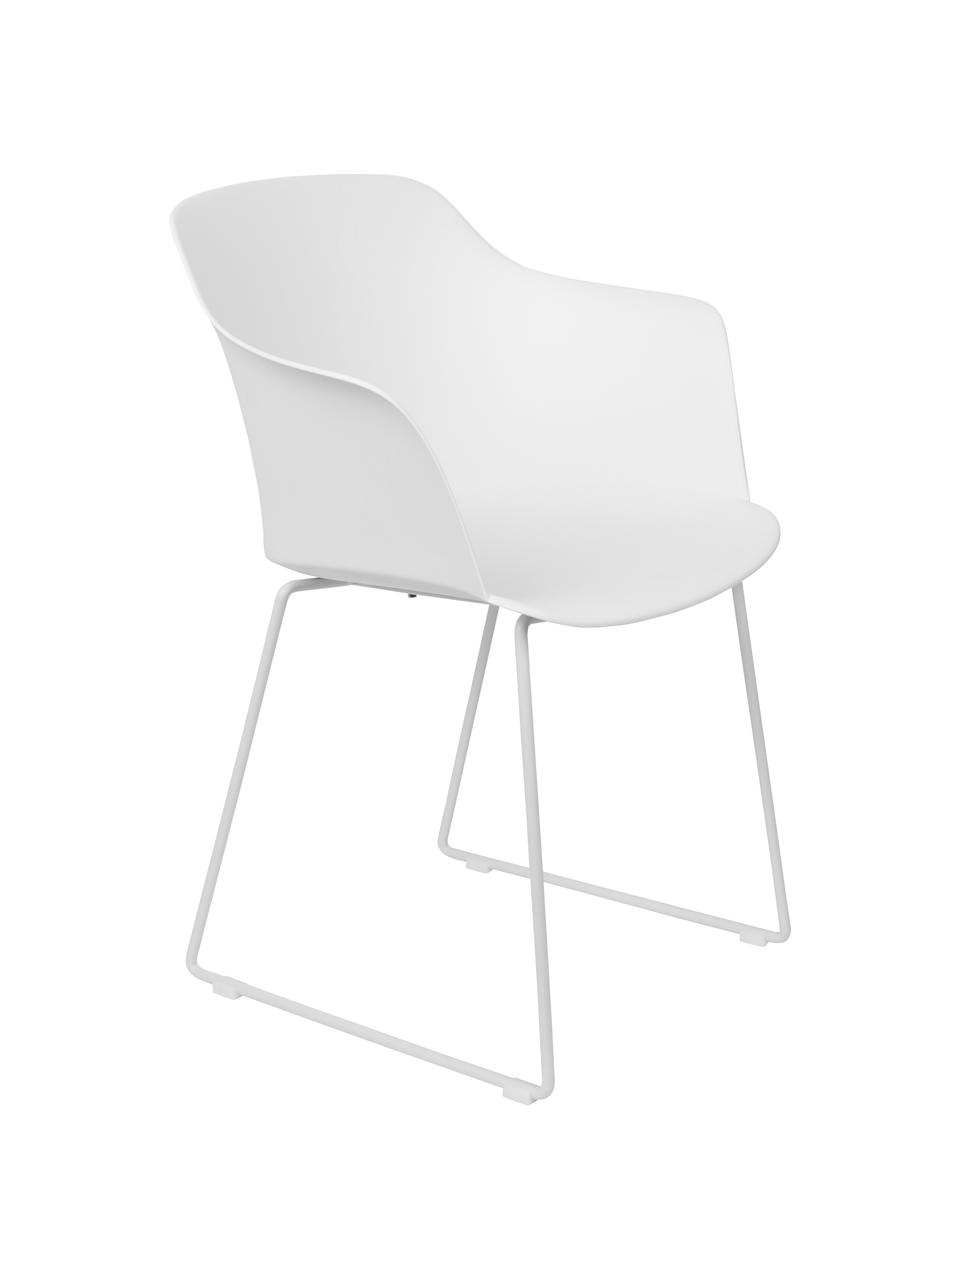 Kunststoff-Armlehnstühle Tango, 2 Stück, Sitzschale: Polypropylen, Beine: Metall, pulverbeschichtet, Weiss, B 58 x T 54 cm